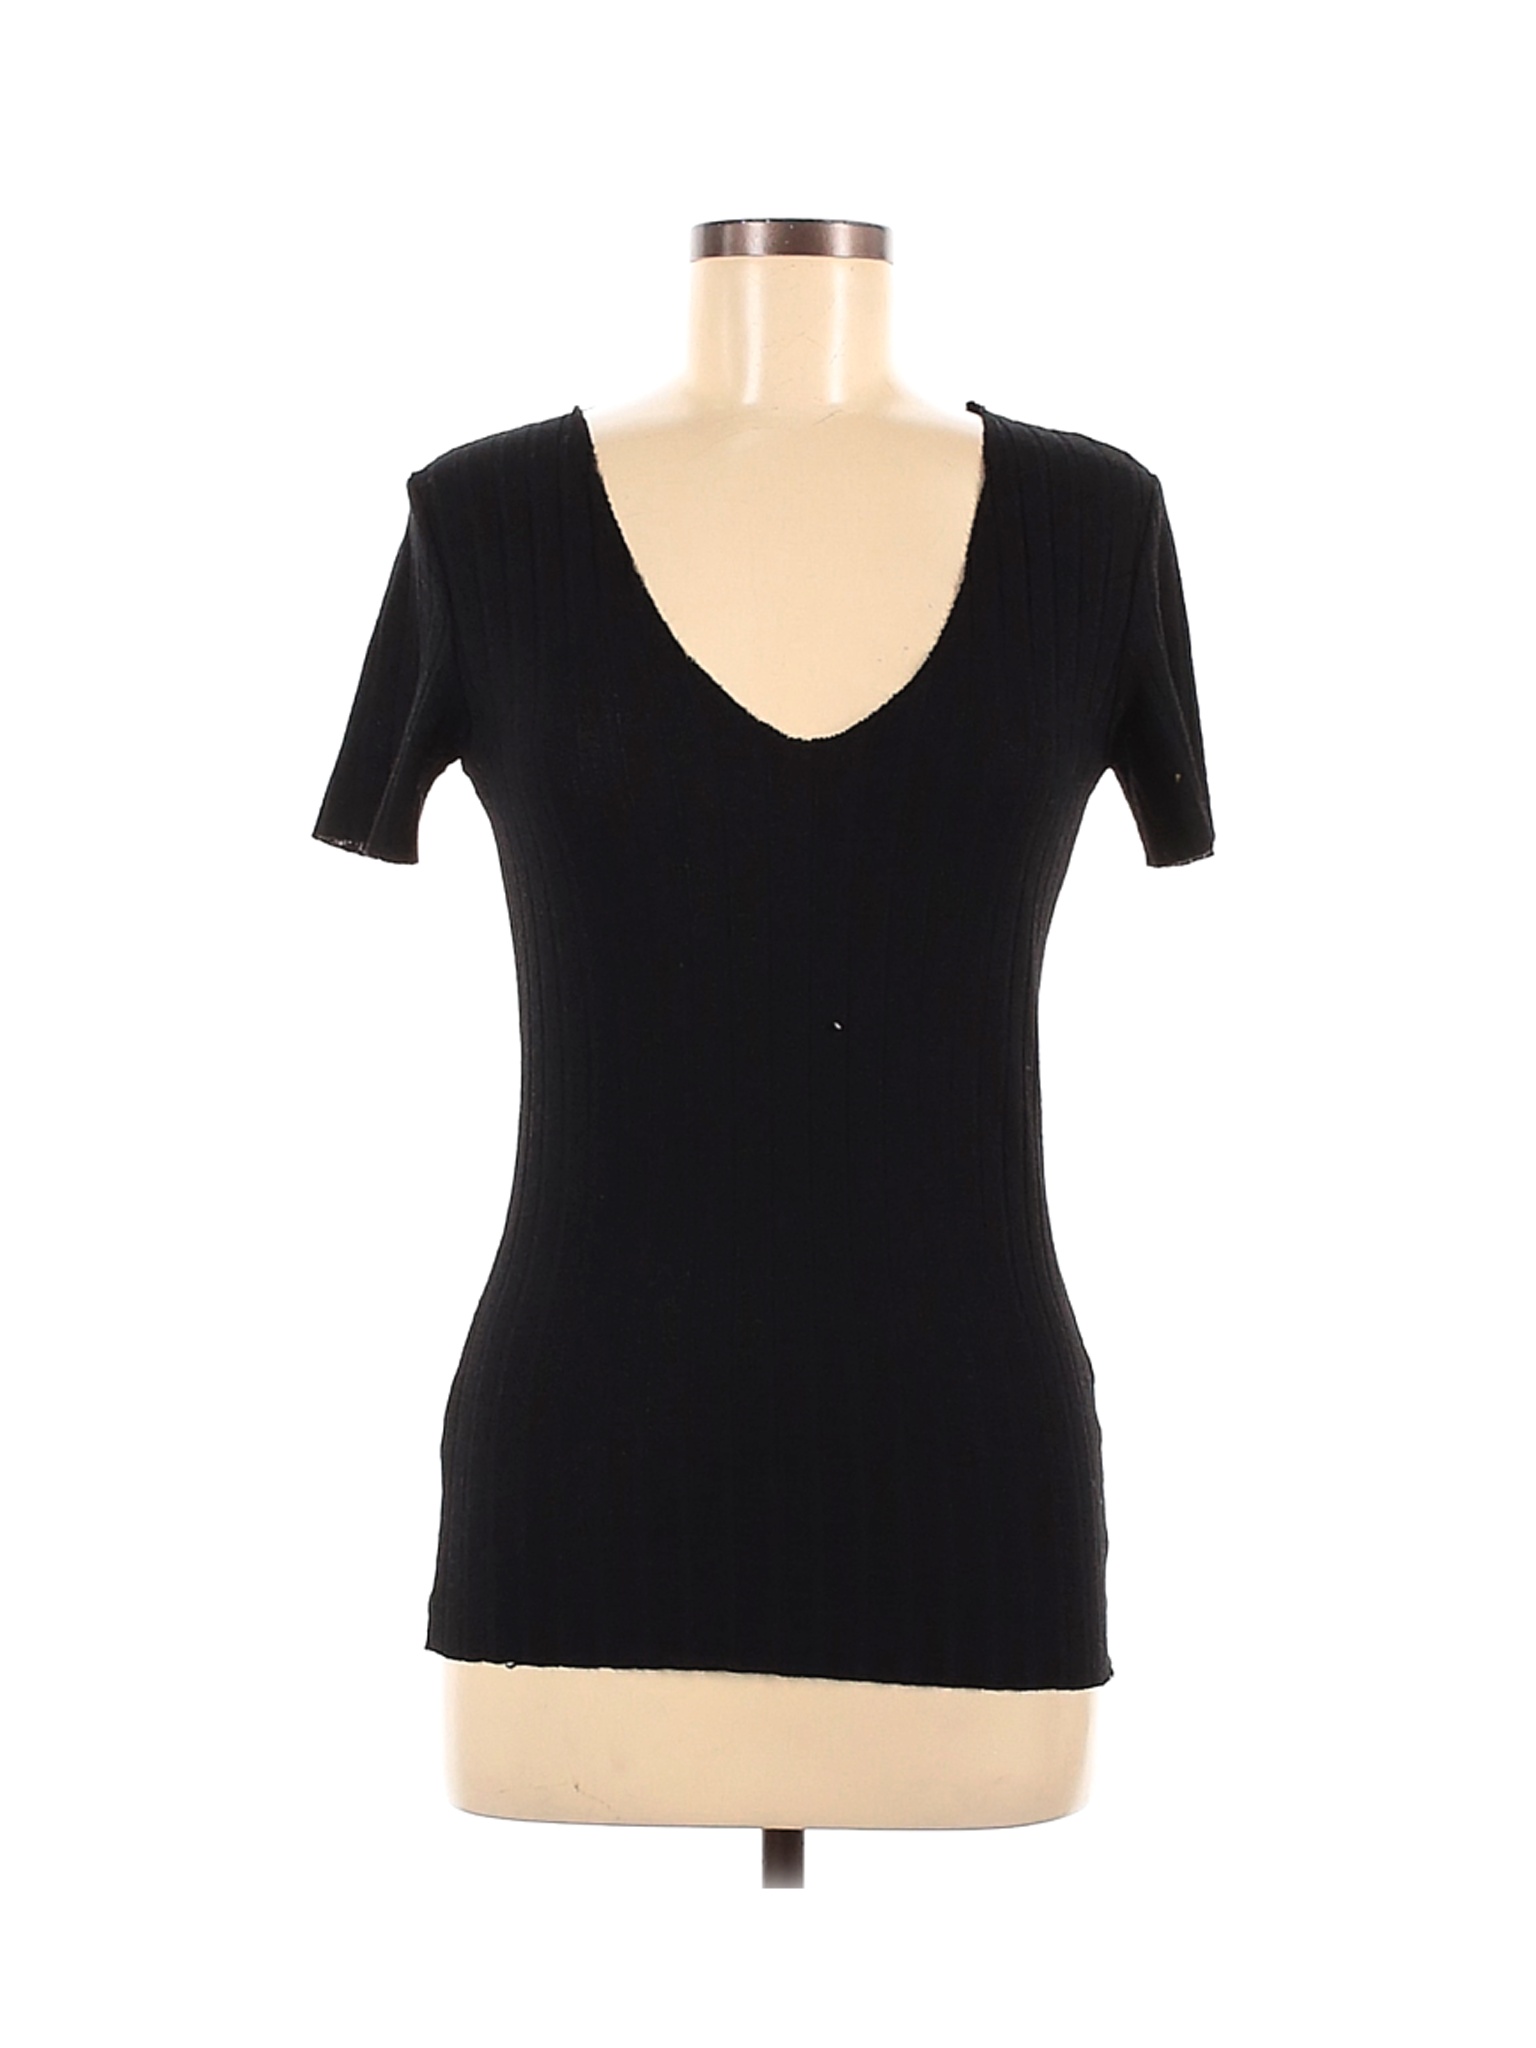 Trafaluc by Zara Women Black Pullover Sweater M | eBay